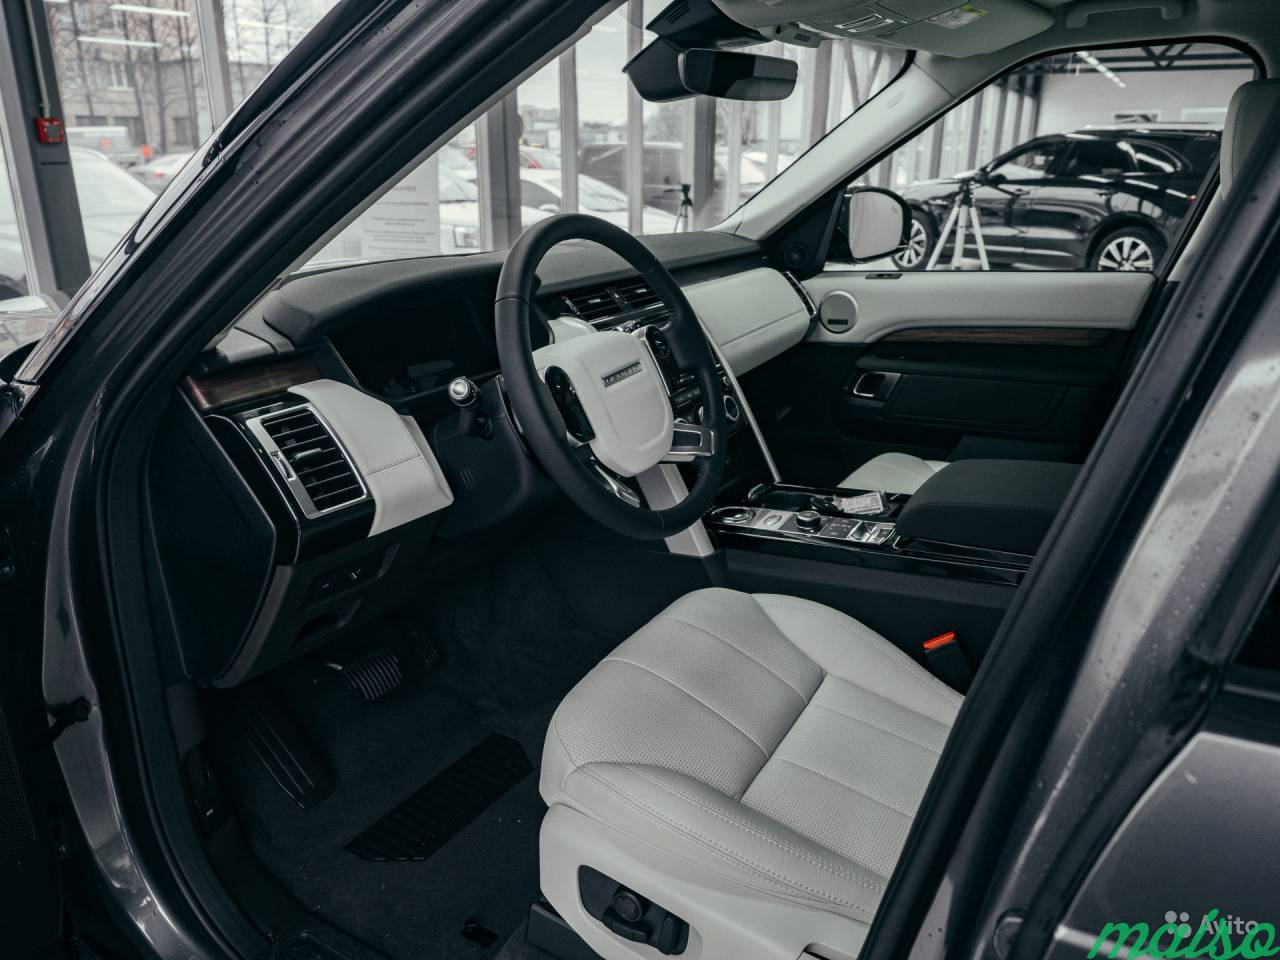 Land Rover Discovery 3.0 AT, 2018, внедорожник в Санкт-Петербурге. Фото 4